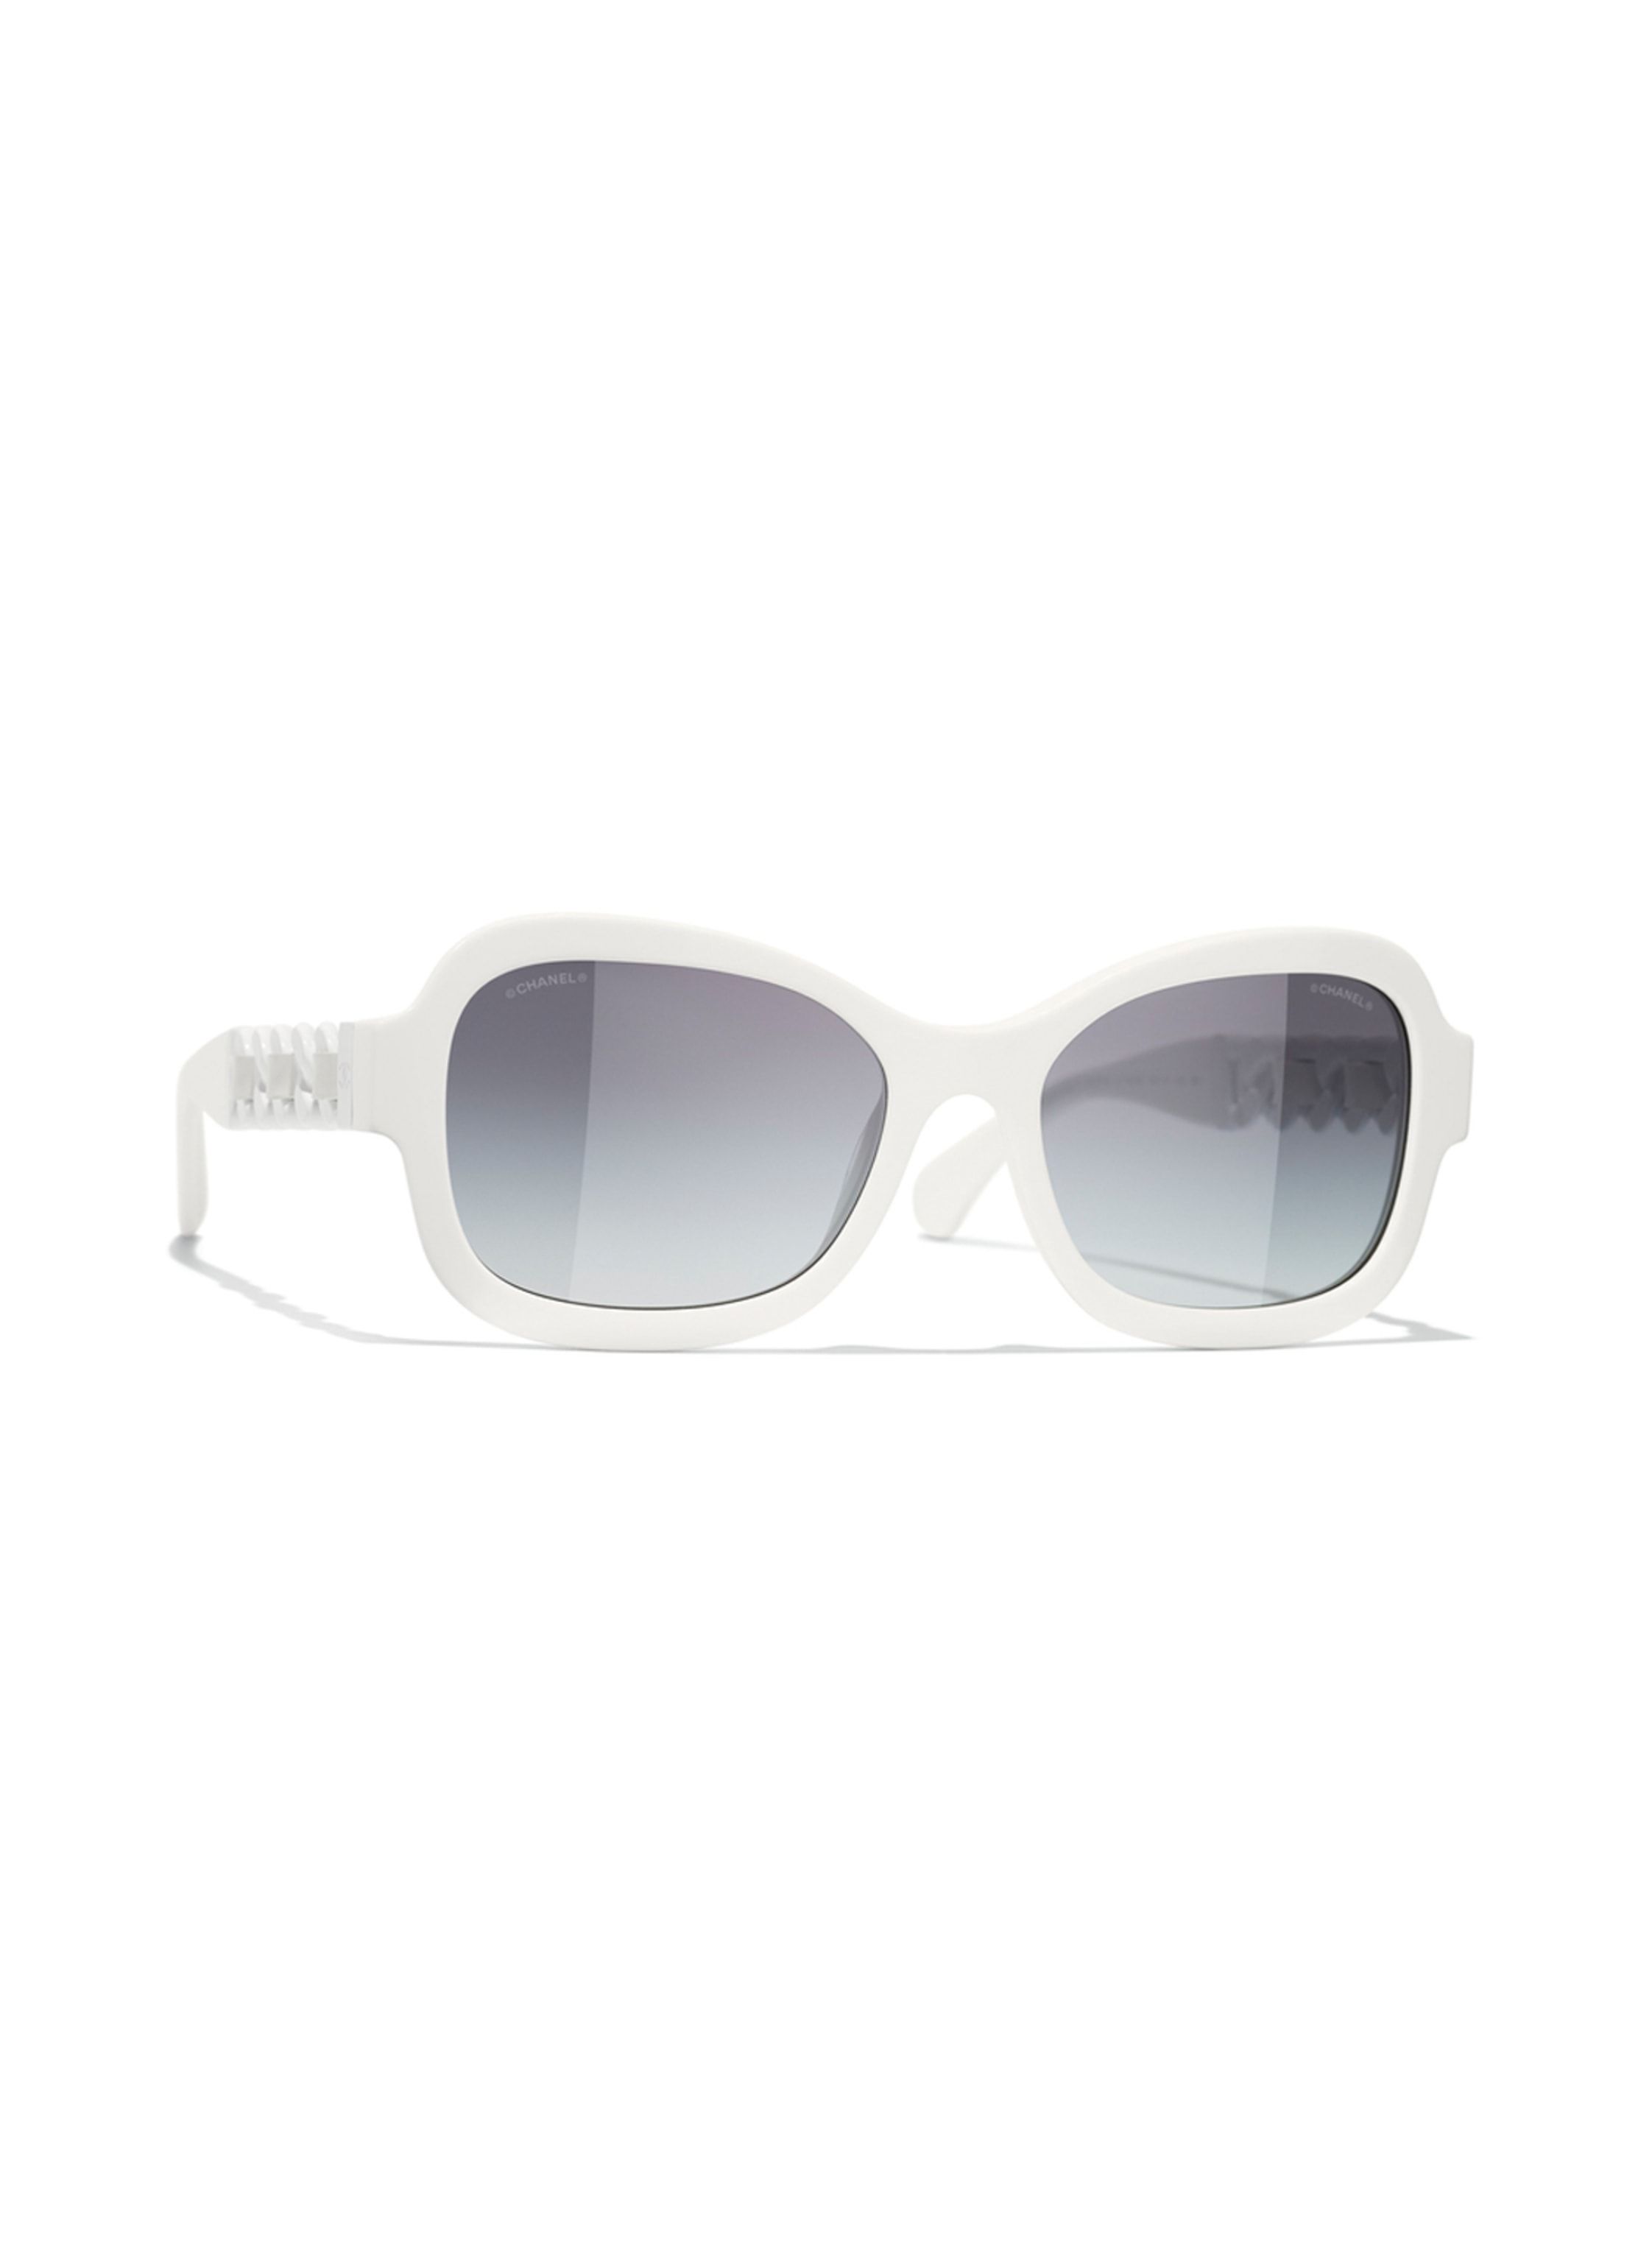 Rechteckige Sonnenbrille | Breuninger (DE/ AT)